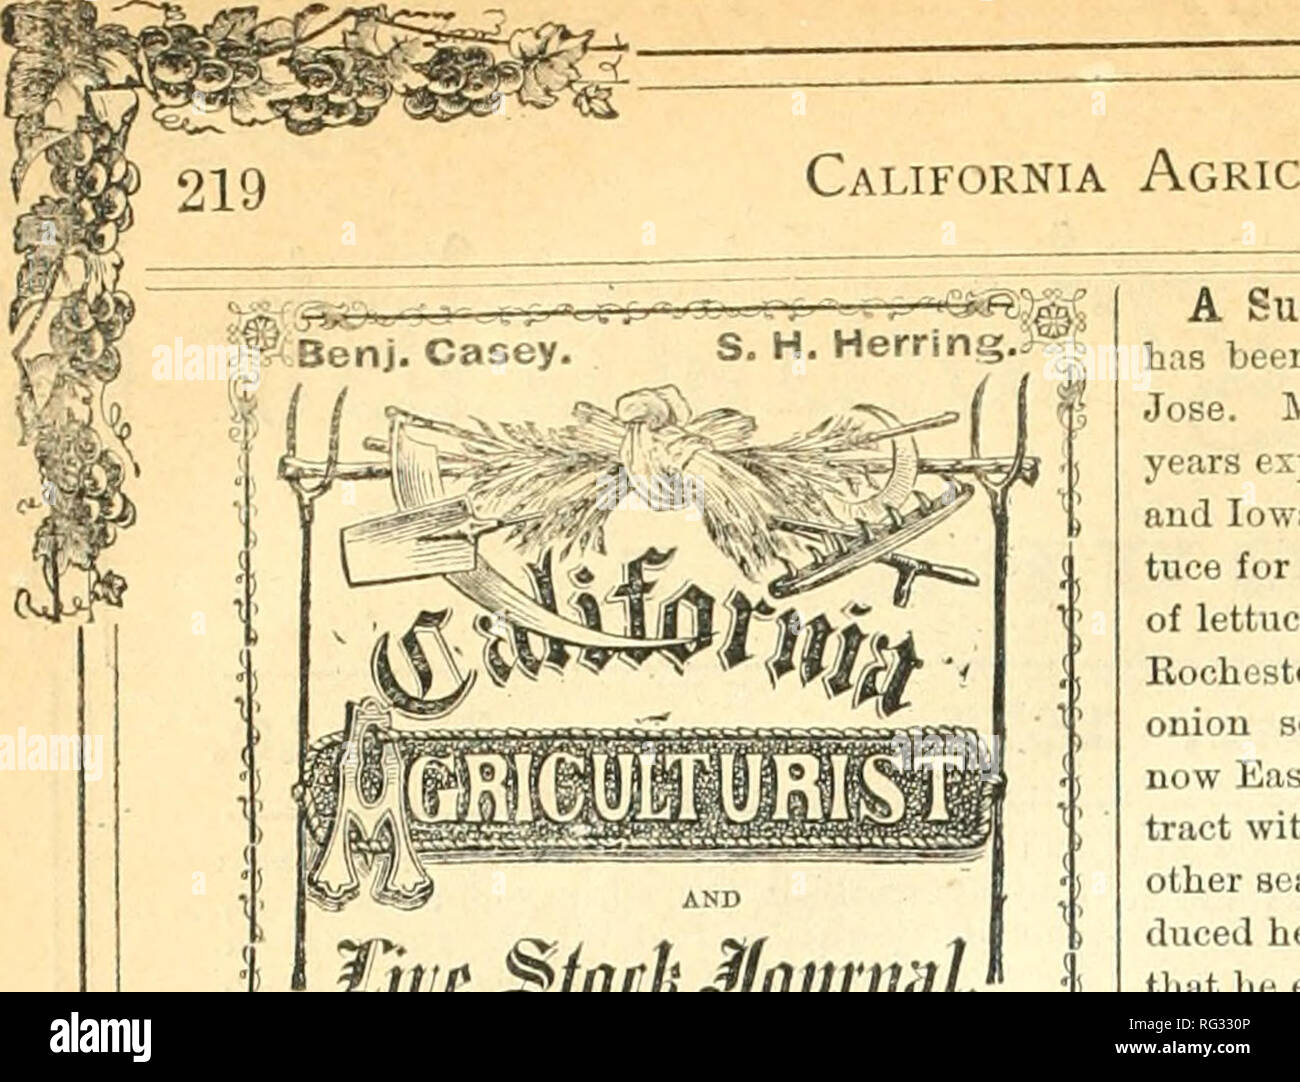 . California agriculturist and live stock journal. Agriculture -- California; Livestock -- California; Animal industry -- California. California Agriculturist and Live Stock Journal. gmghe1t^aun(itlJ S. HAEEIS HEREING &amp; 00., Kilili&gt;i'.s and rublishi-TS. OKFK'K: Over tlie Siin Jose Siivltiffs Rank, liiillmcliN Biiildiiiu;, $&gt;uiita C'lura Street, near First, Sim Jose. SPECIAL TEEMS TO AGENTS. BATES OF ADVERTISING. Per onp C.ihimn ?15 nn Per Month â¢â¢ iKilf Oohimn 8 00 &quot; &quot; fimrlli &lt;:nlmin 4 00 &quot; &quot; &quot; .â islithClnnm 2 00 &quot; &quot; sixteenth Column 100 *'  Stock Photo